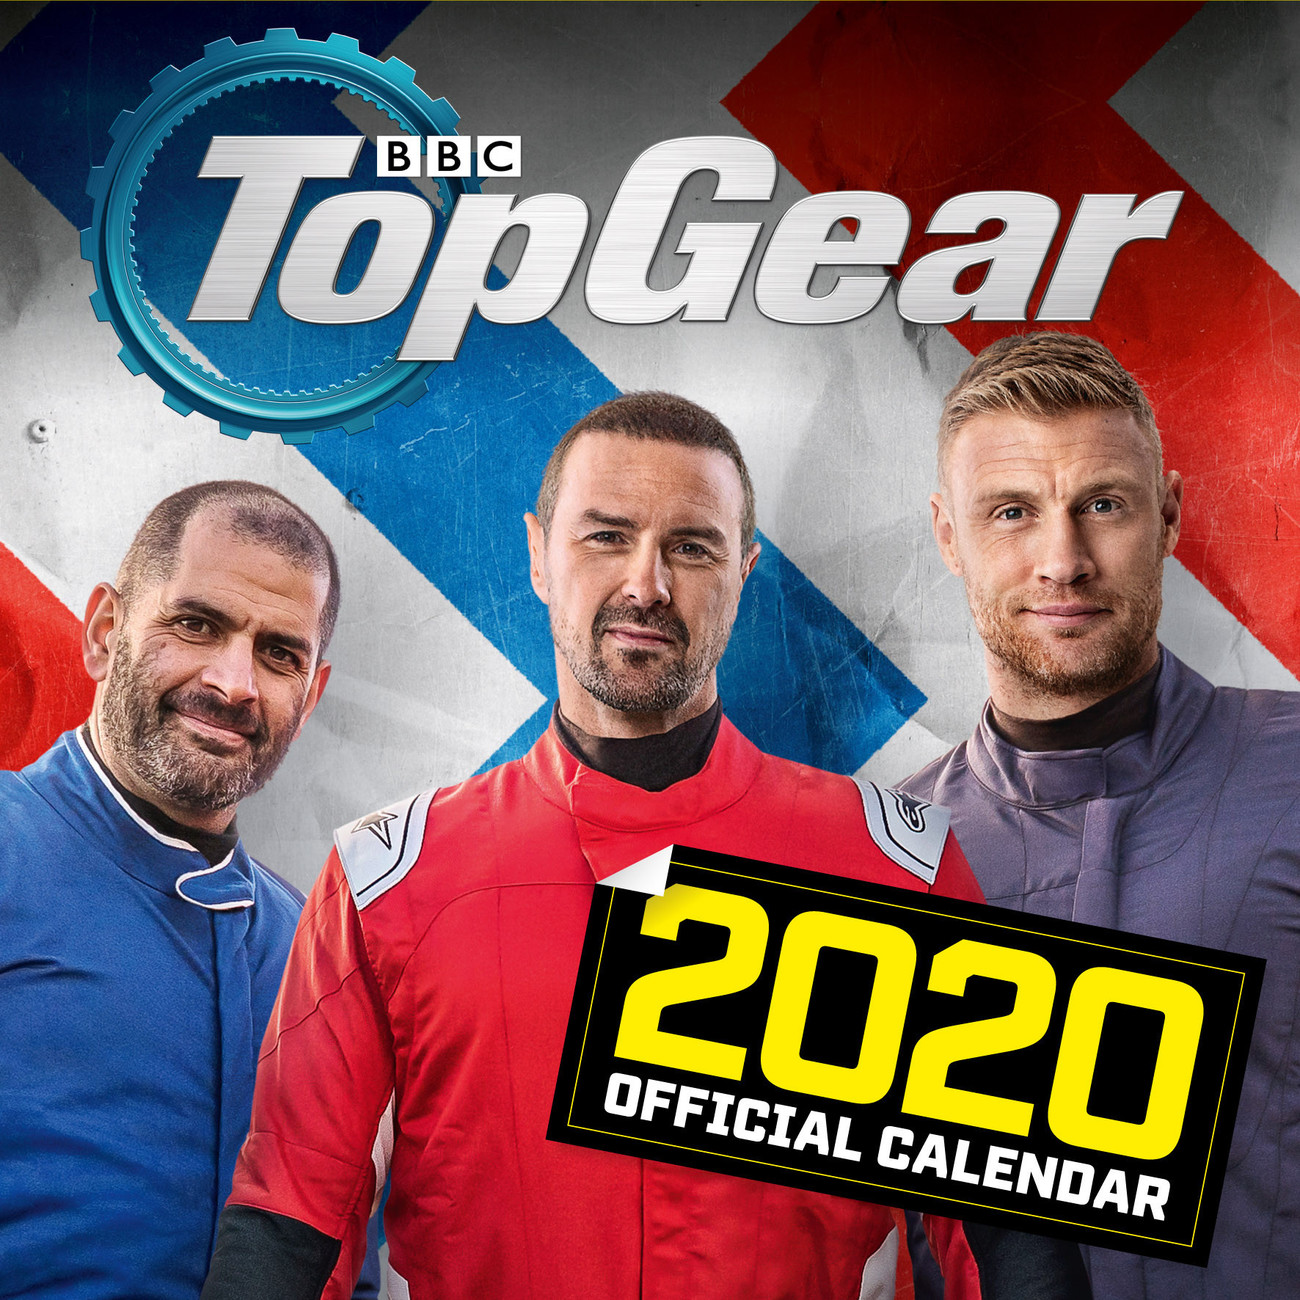 Odysseus Tag væk Skoleuddannelse Top Gear - Wall Calendars 2020 | Buy at Abposters.com